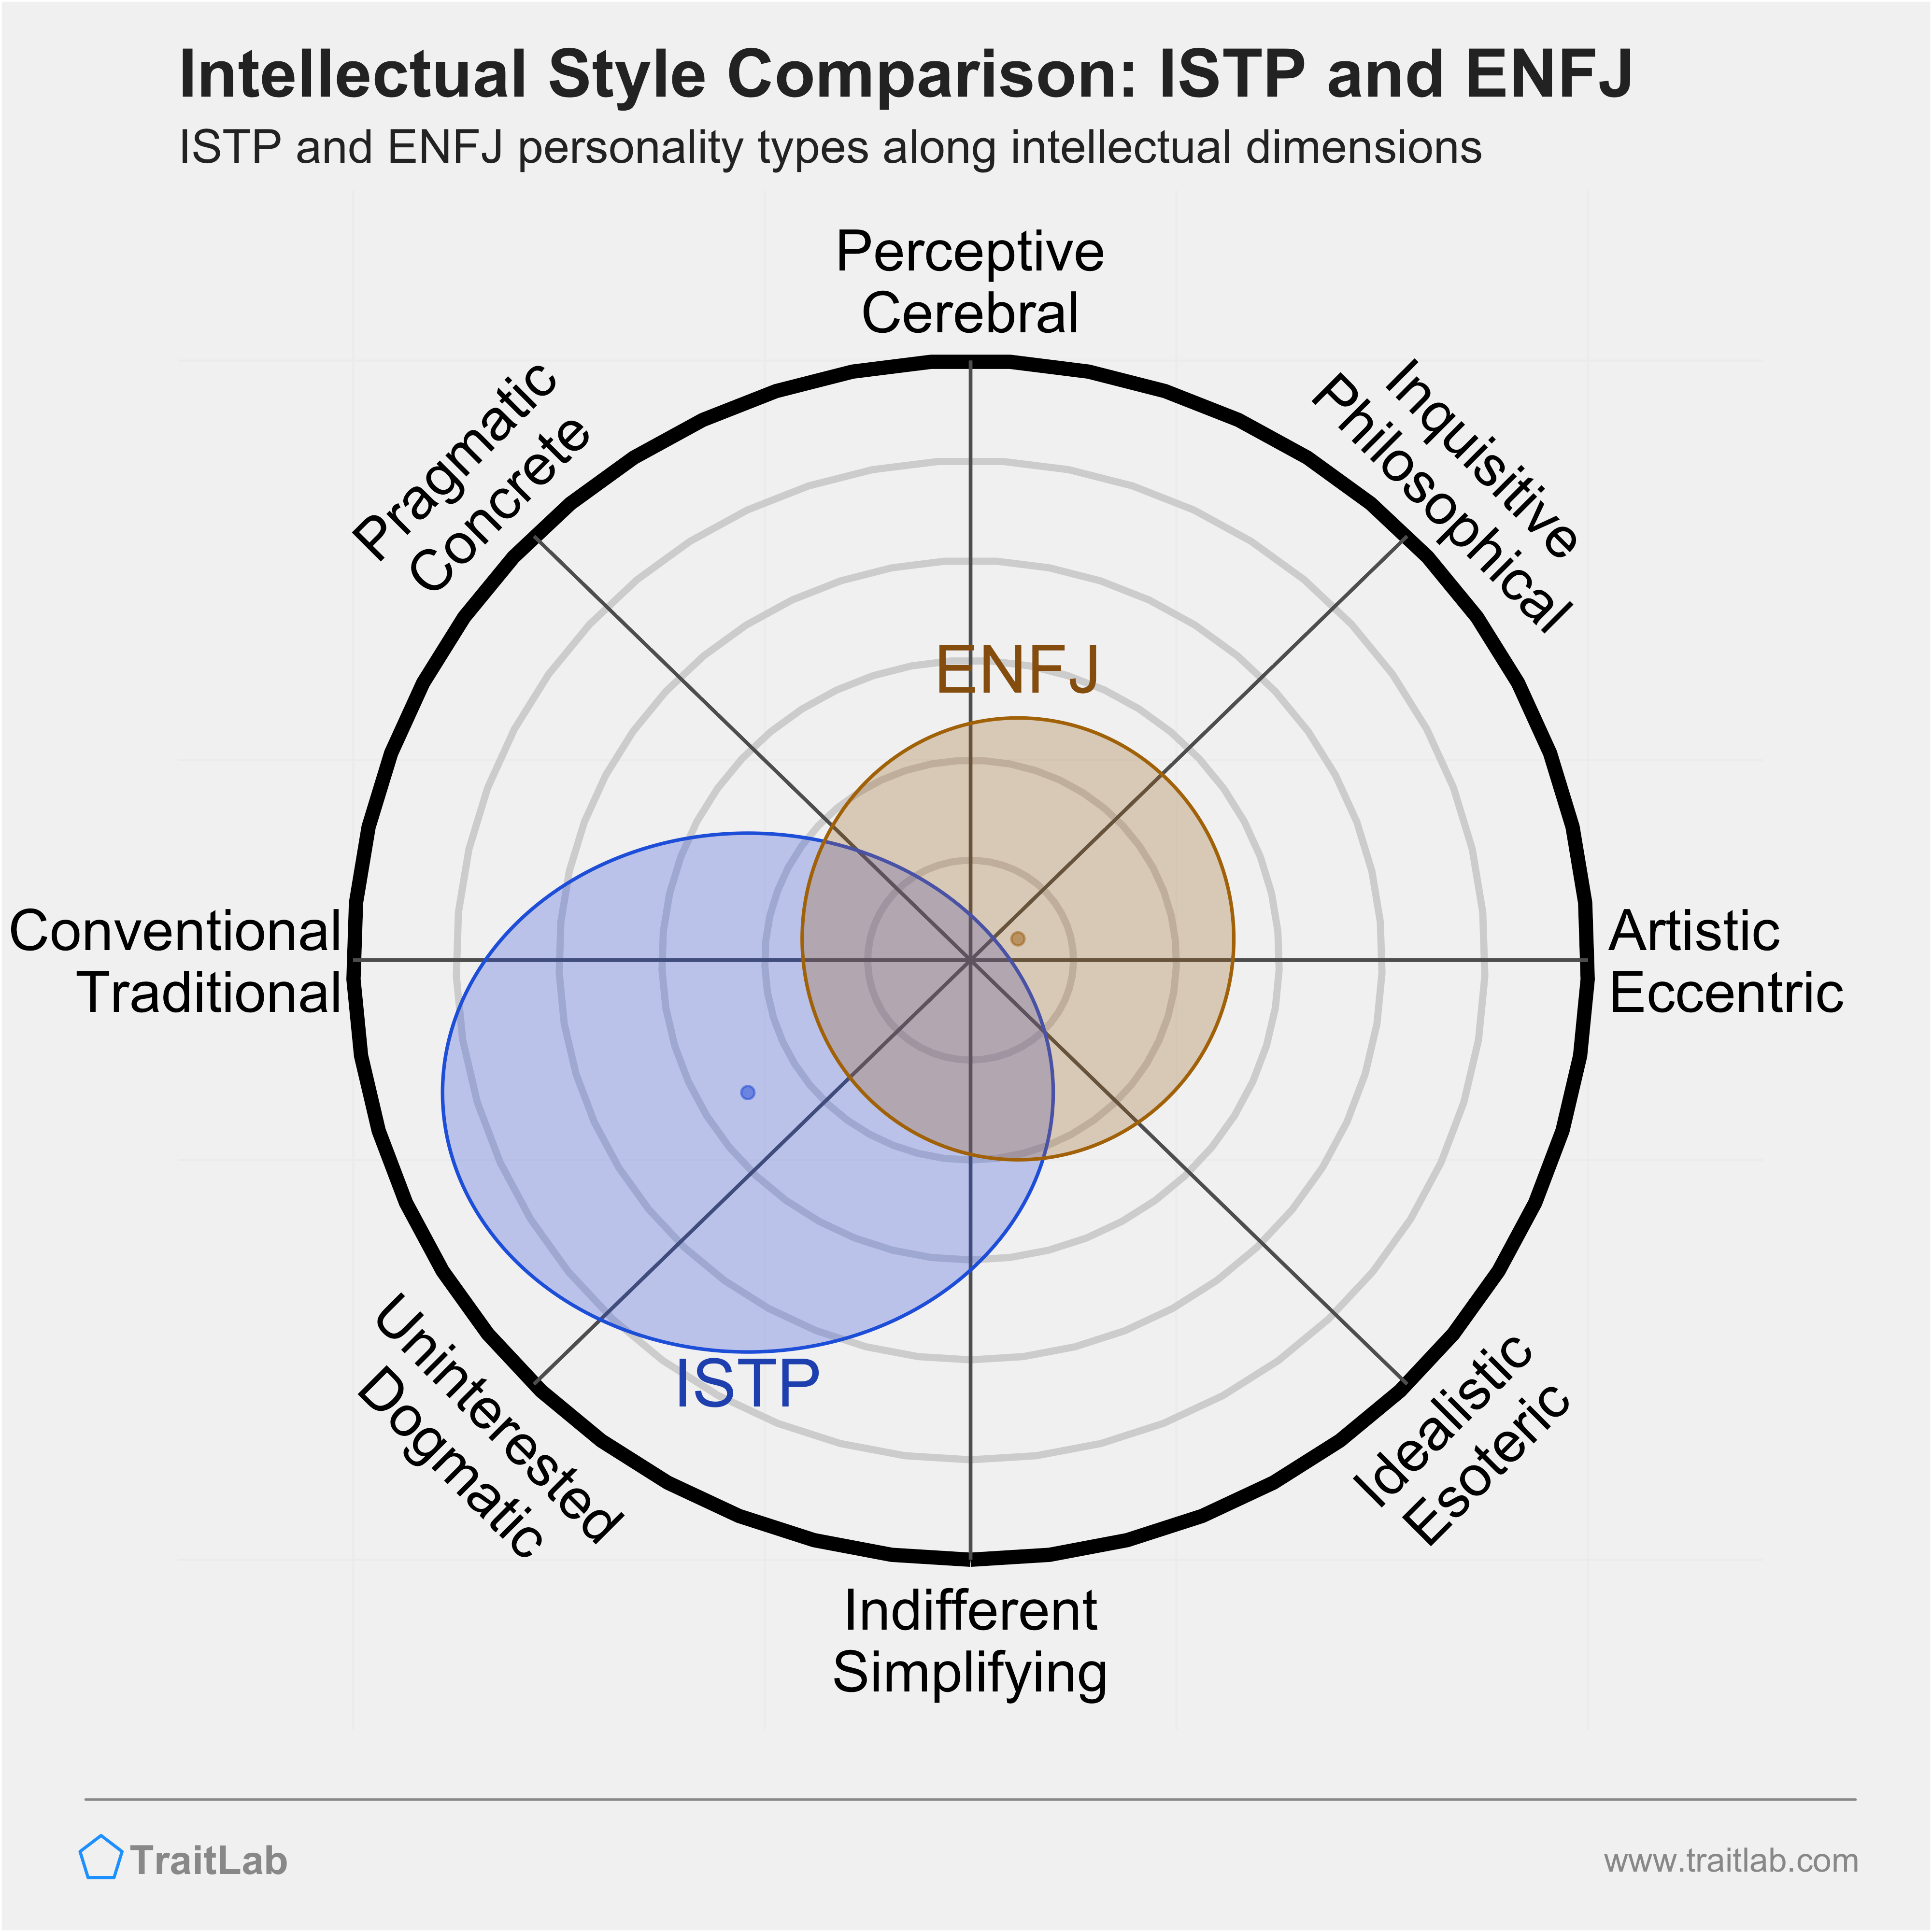 ISTP and ENFJ comparison across intellectual dimensions